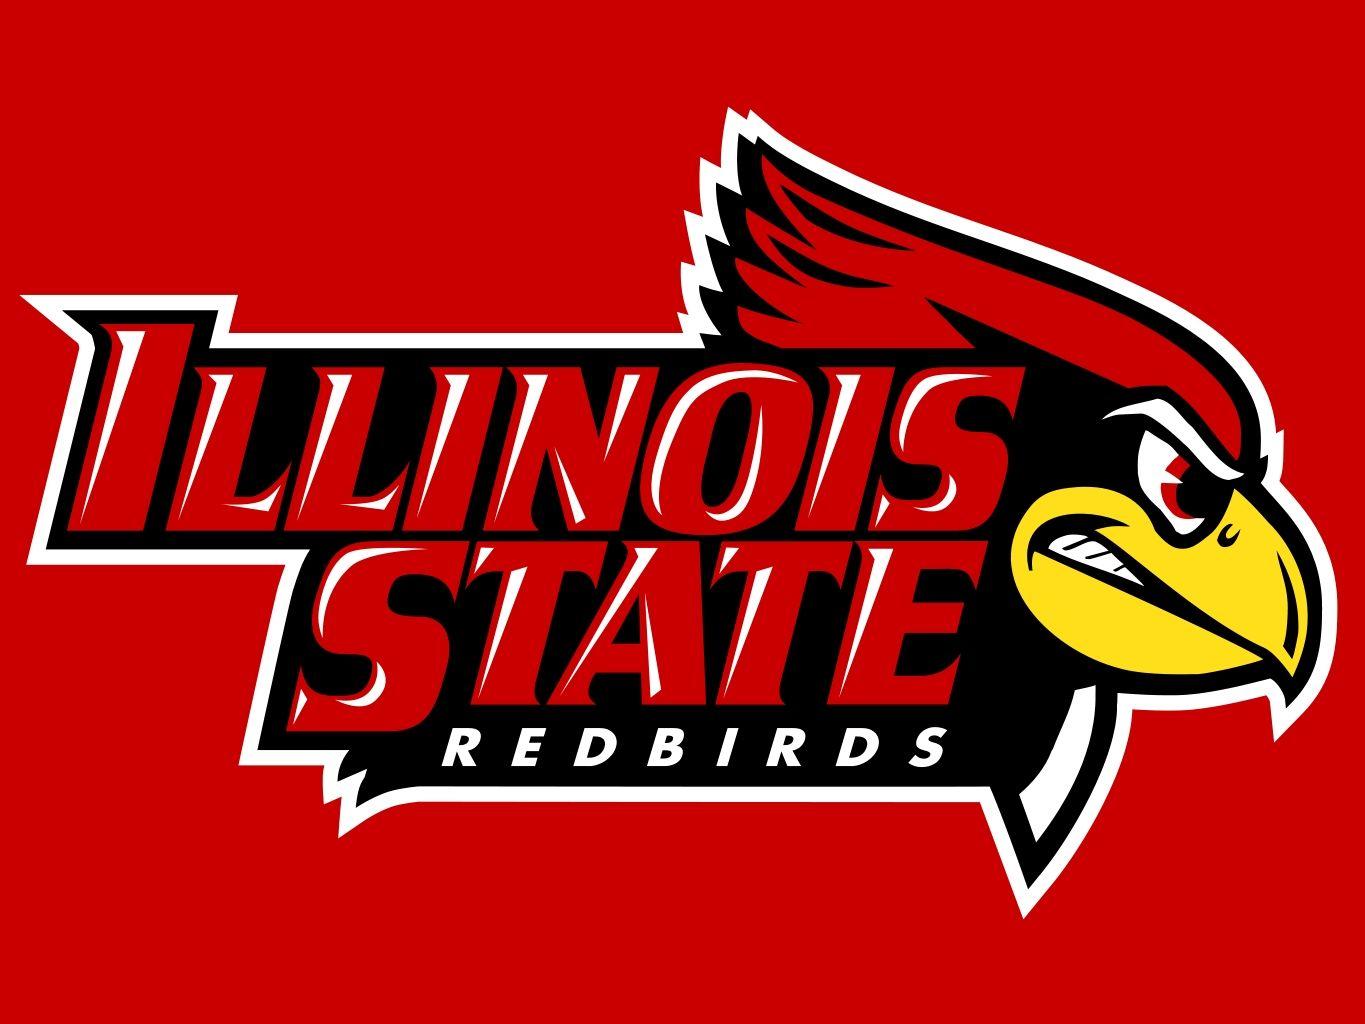 ISU Redbird Logo - Illinois state university Logos